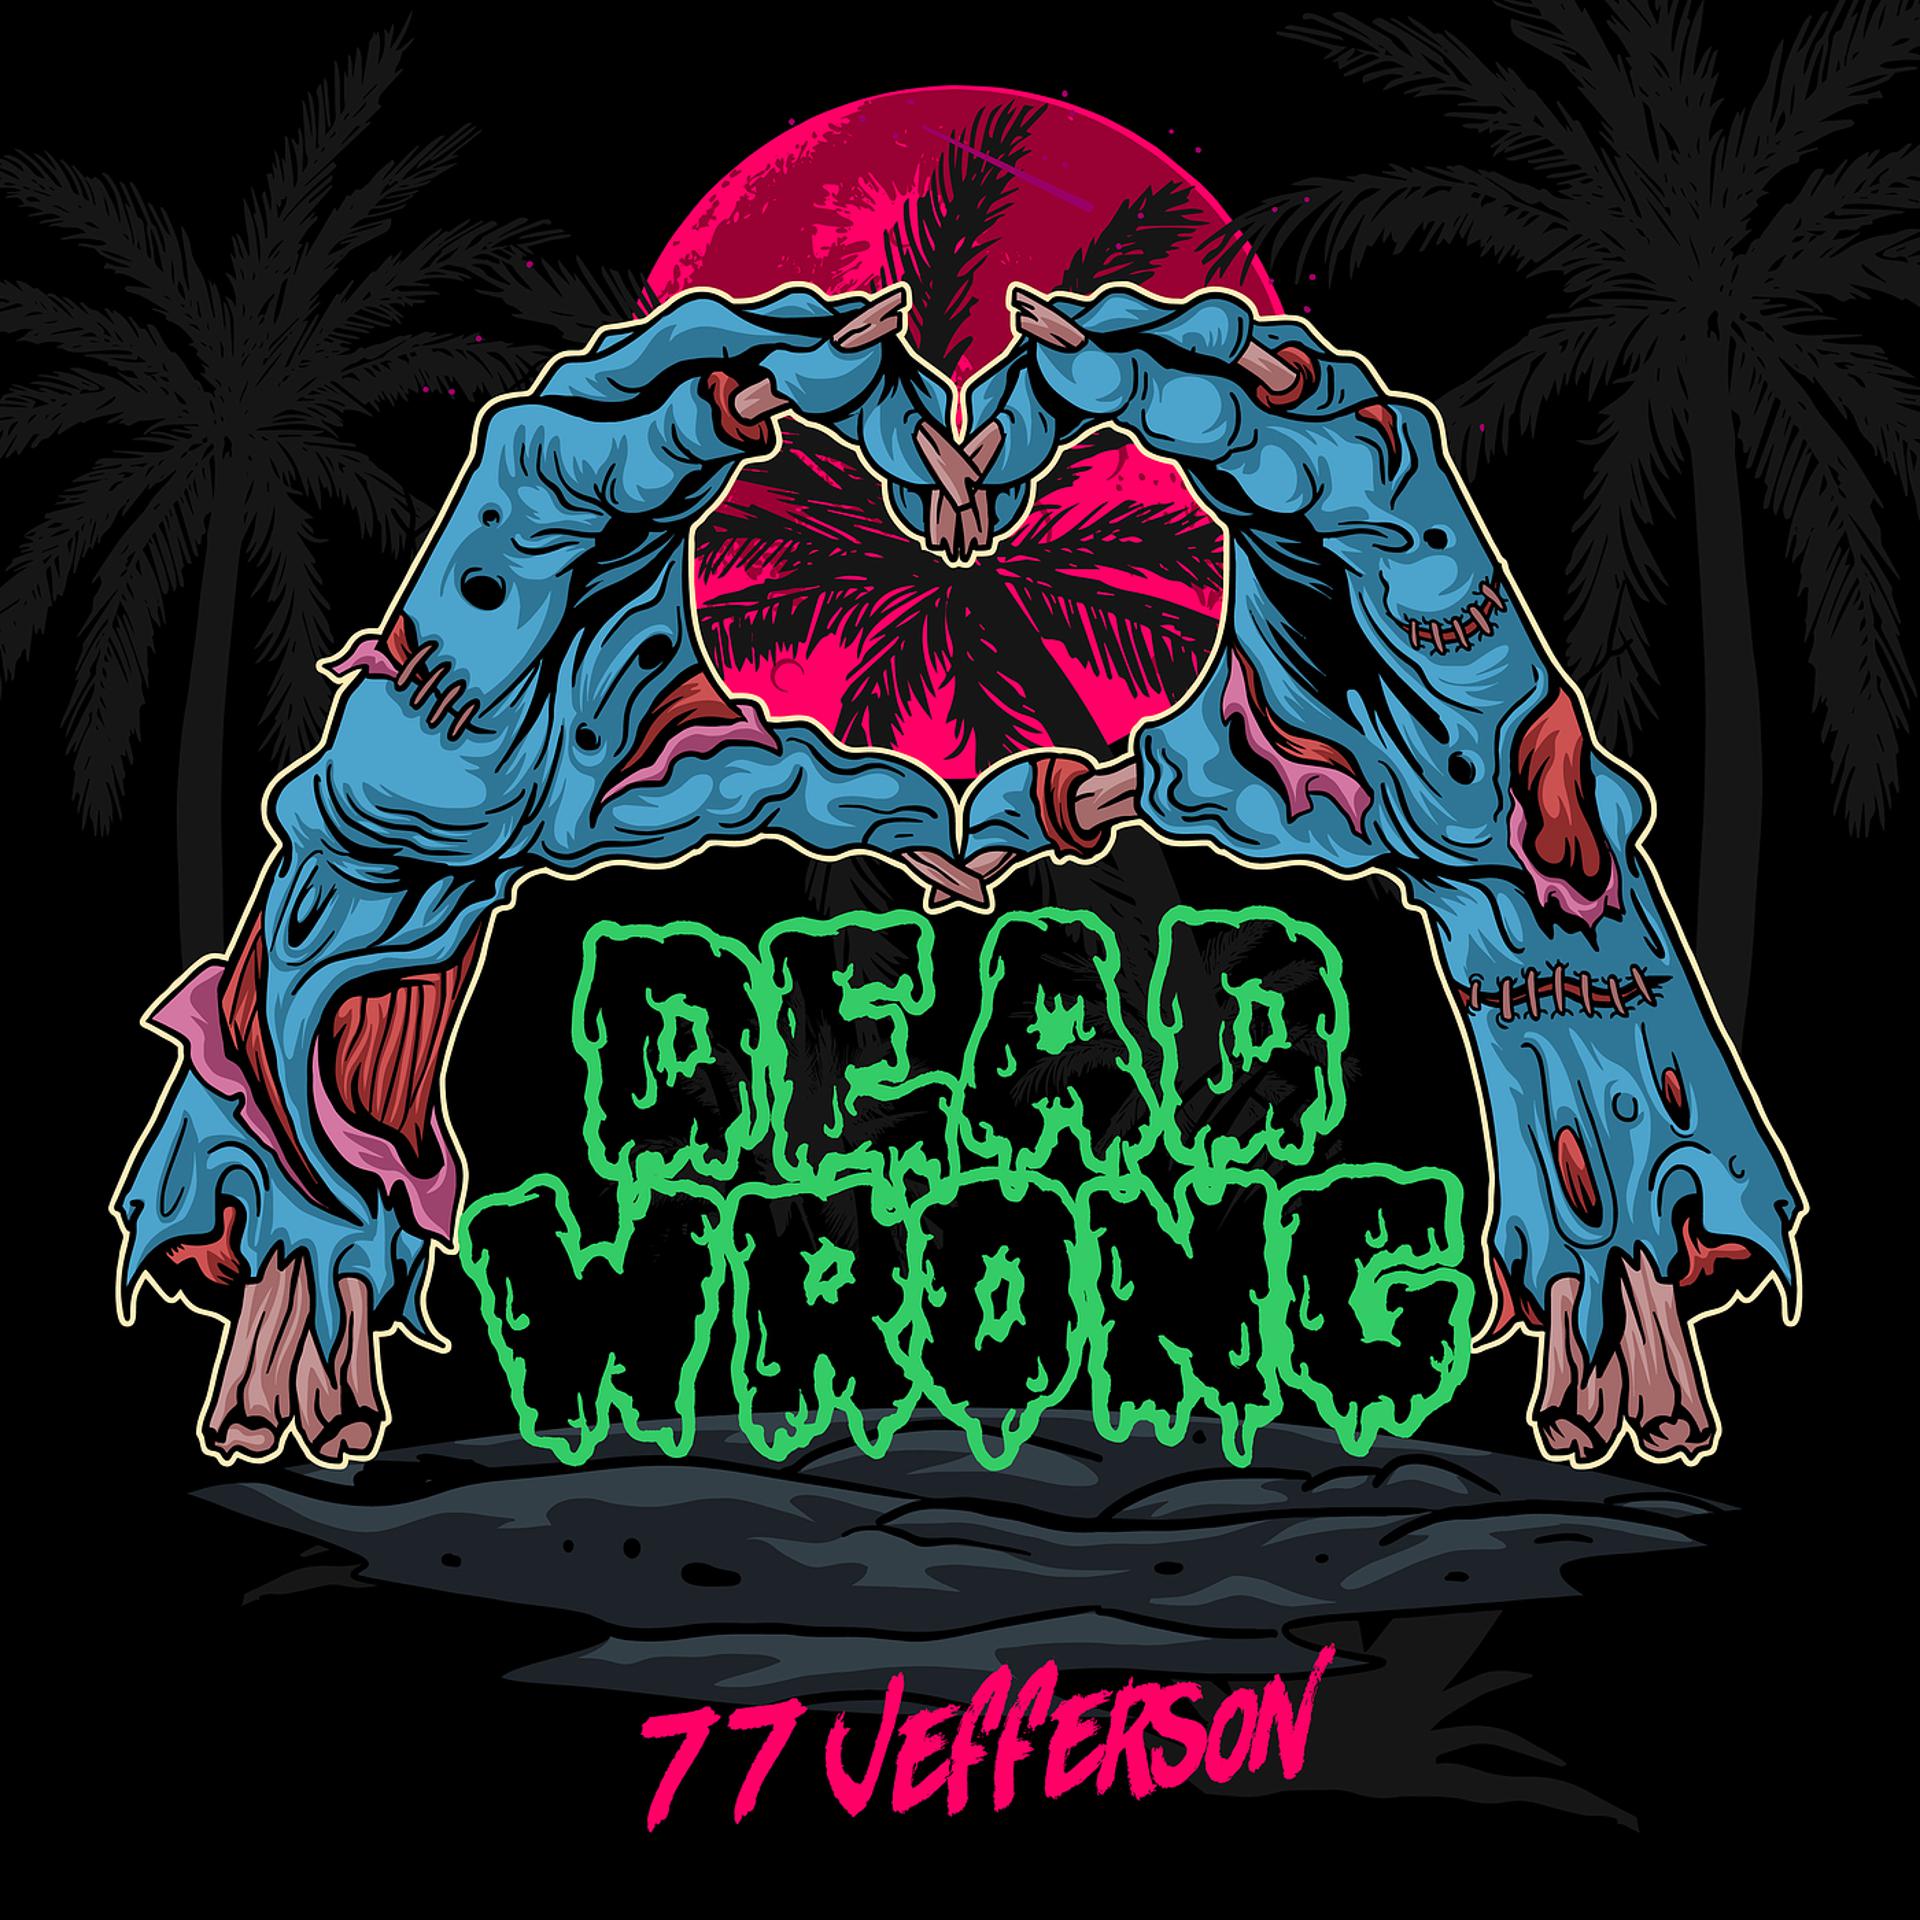 Постер альбома Dead Wrong